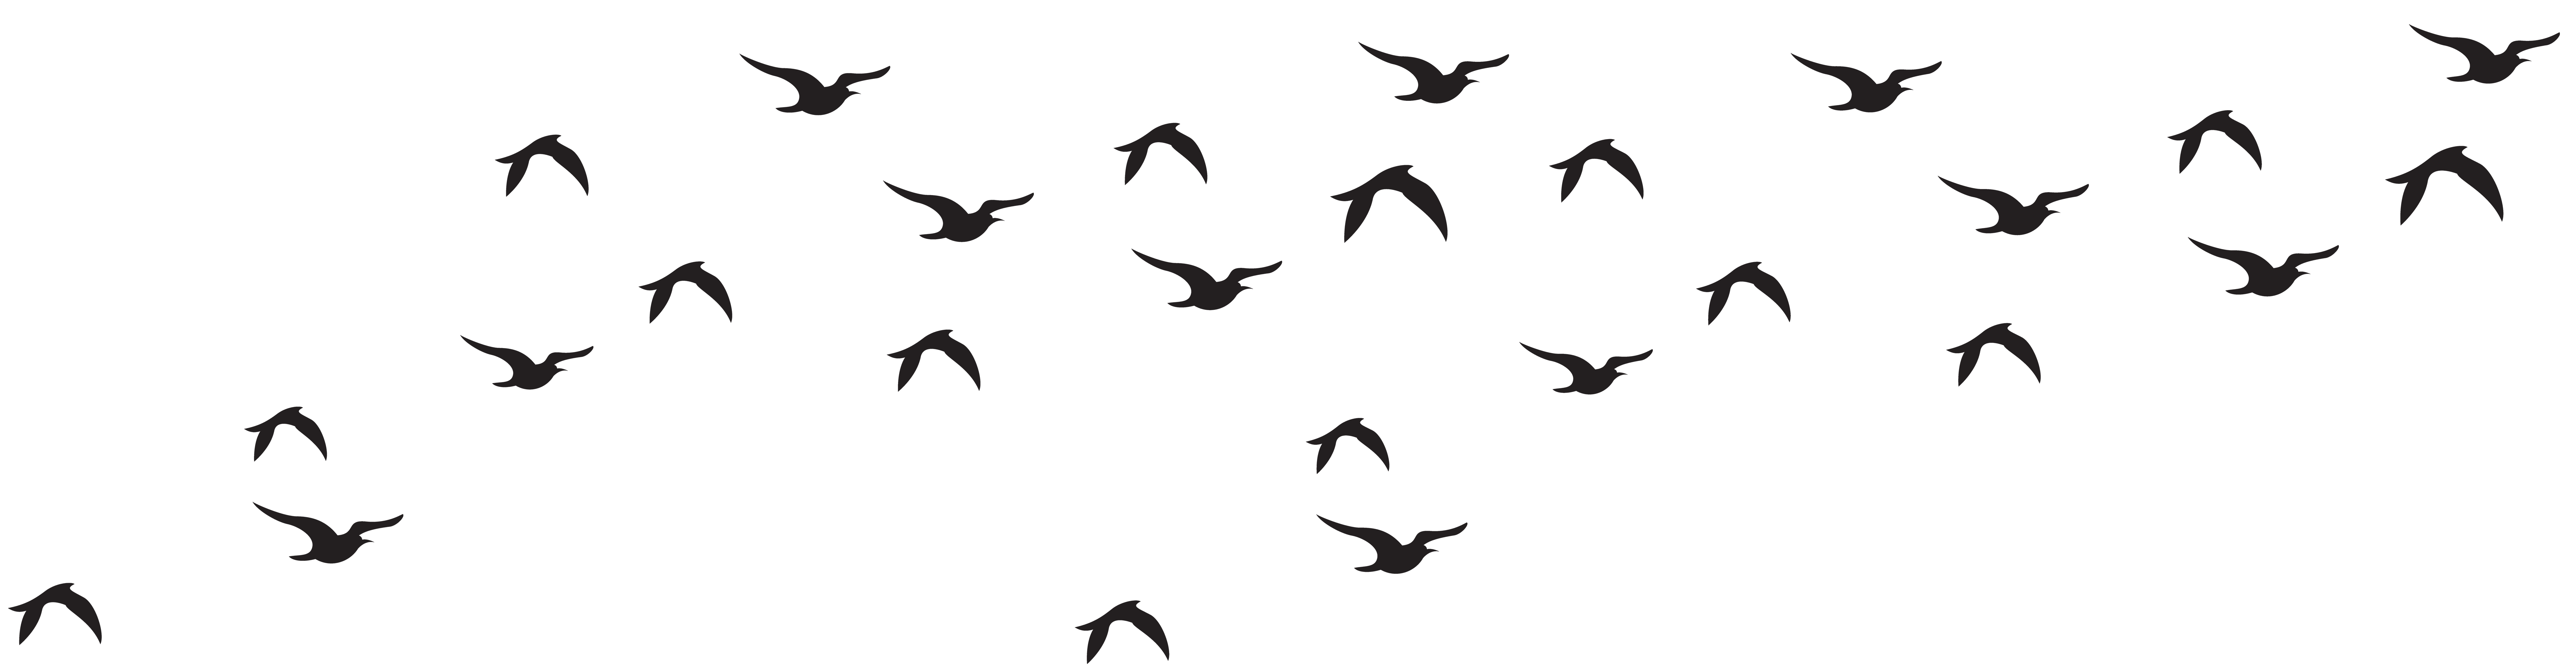 Birds Flock Silhouette Clip Art Image | Gallery Yopriceville - High ...